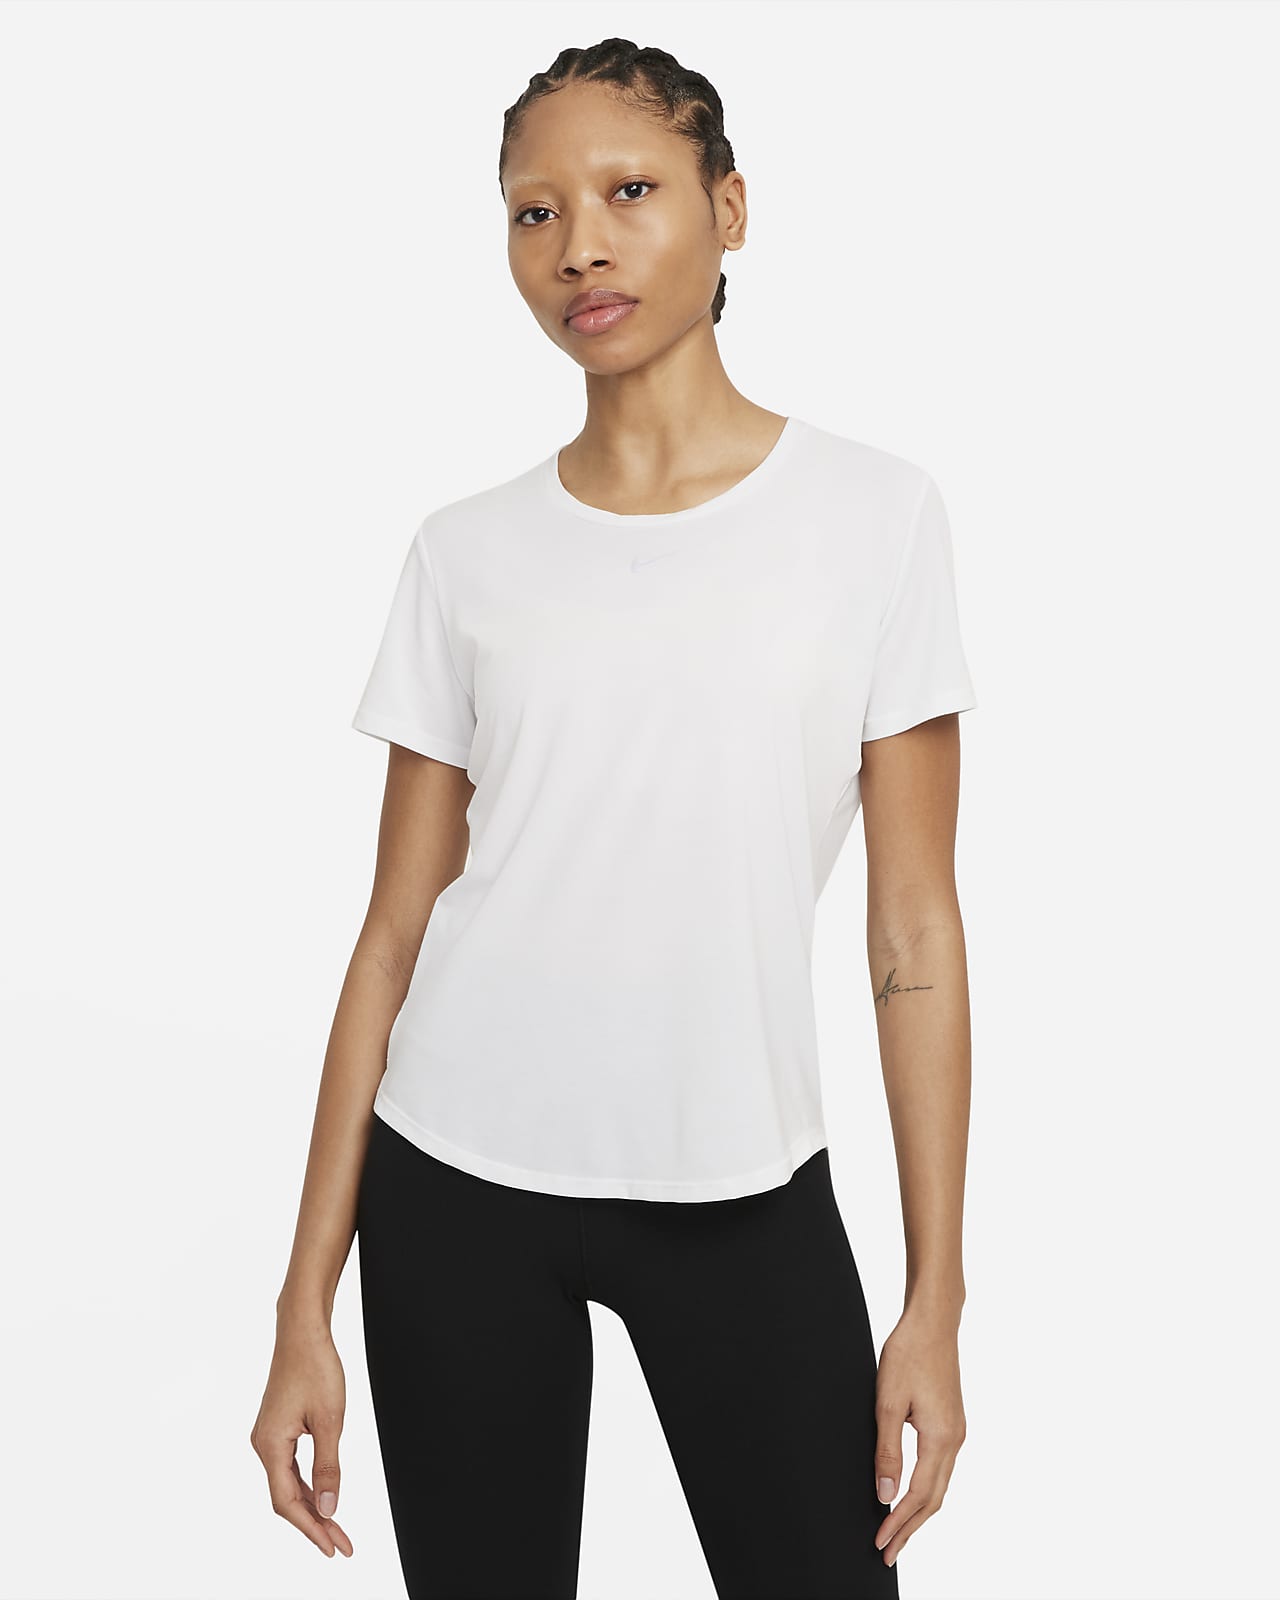 Nike Dri-FIT UV One Luxe Women's Standard Fit Short-Sleeve Top